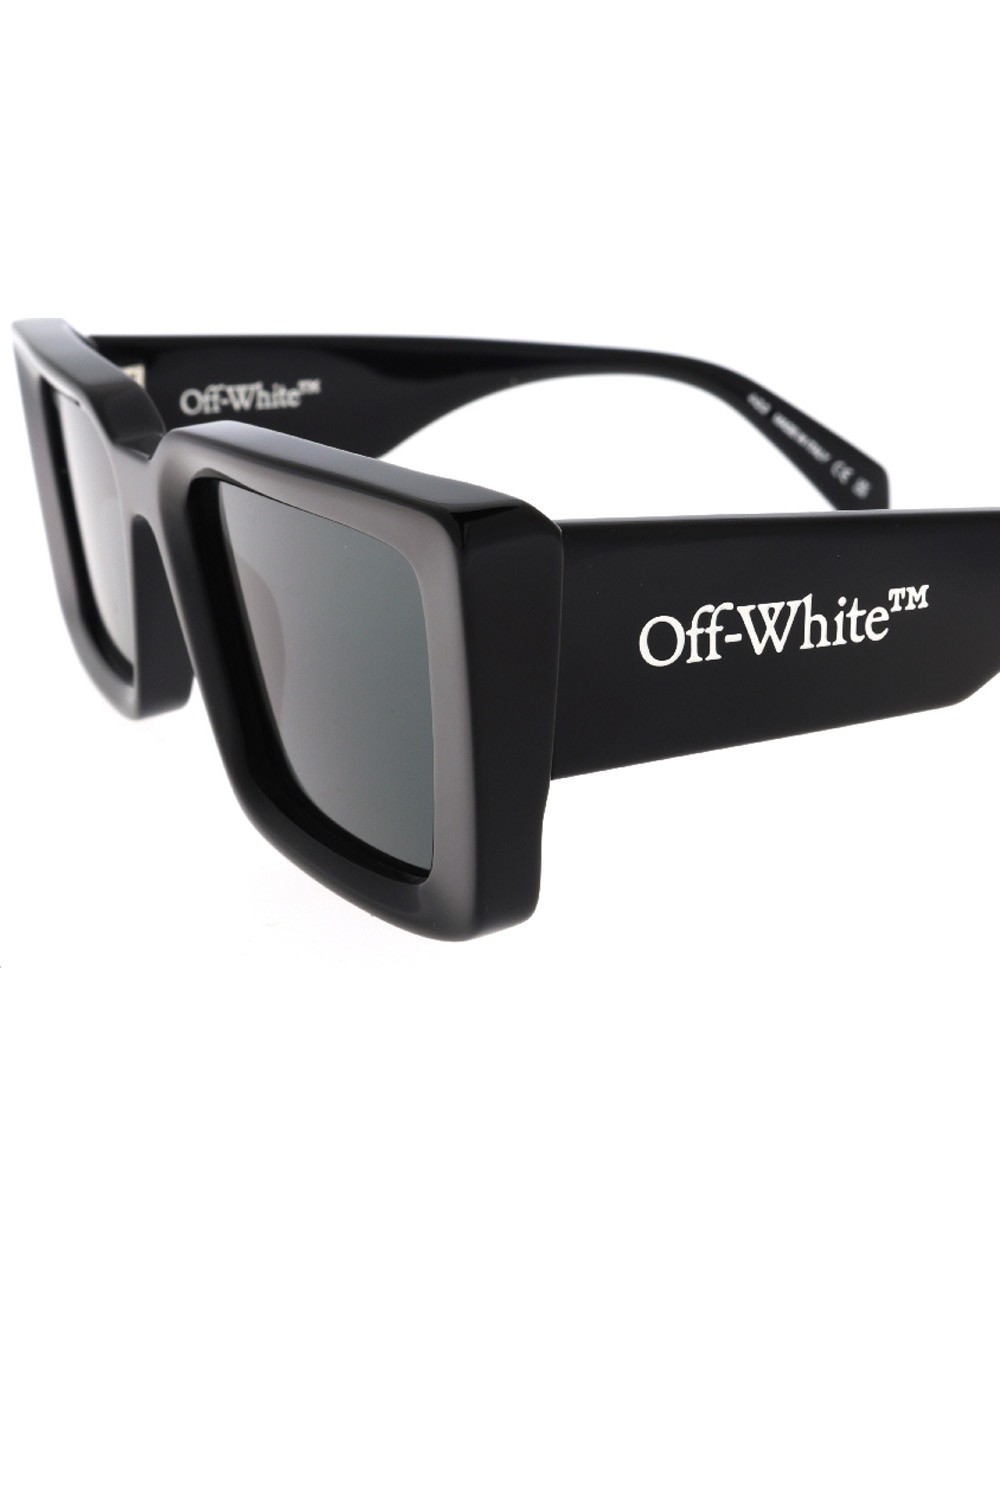 Off-White Savannah OERI064 1007 53 Sunglasses